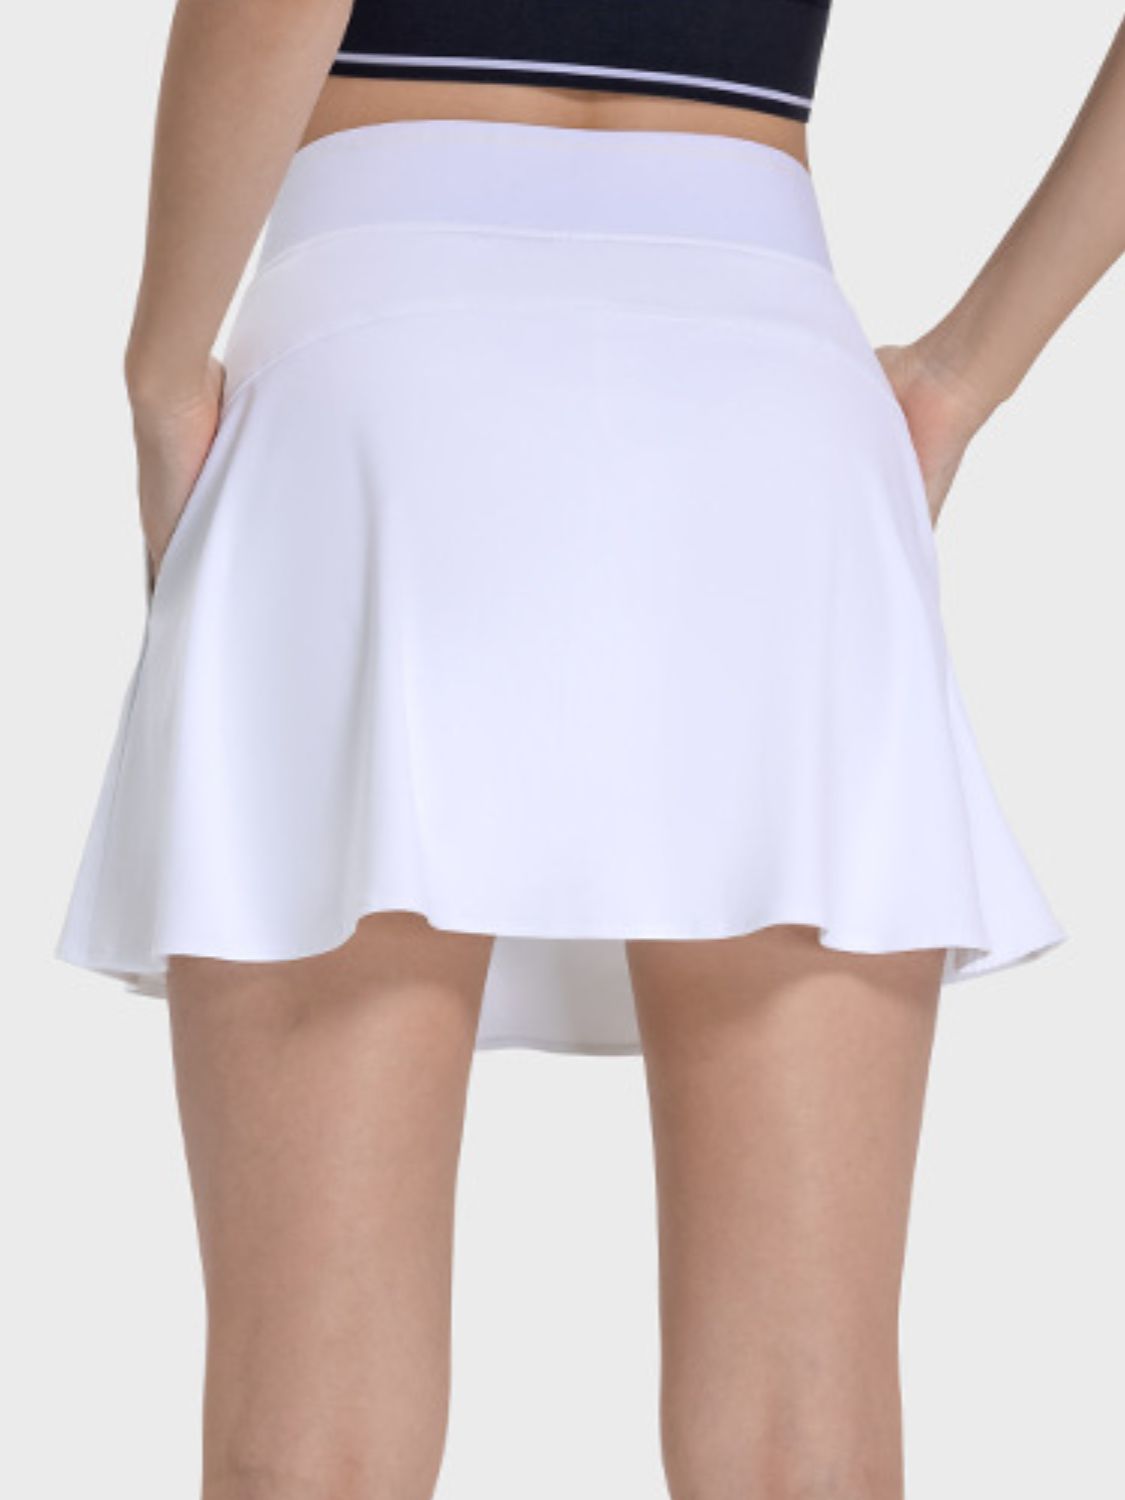 Pocketed Elastic Waist Active Skirt